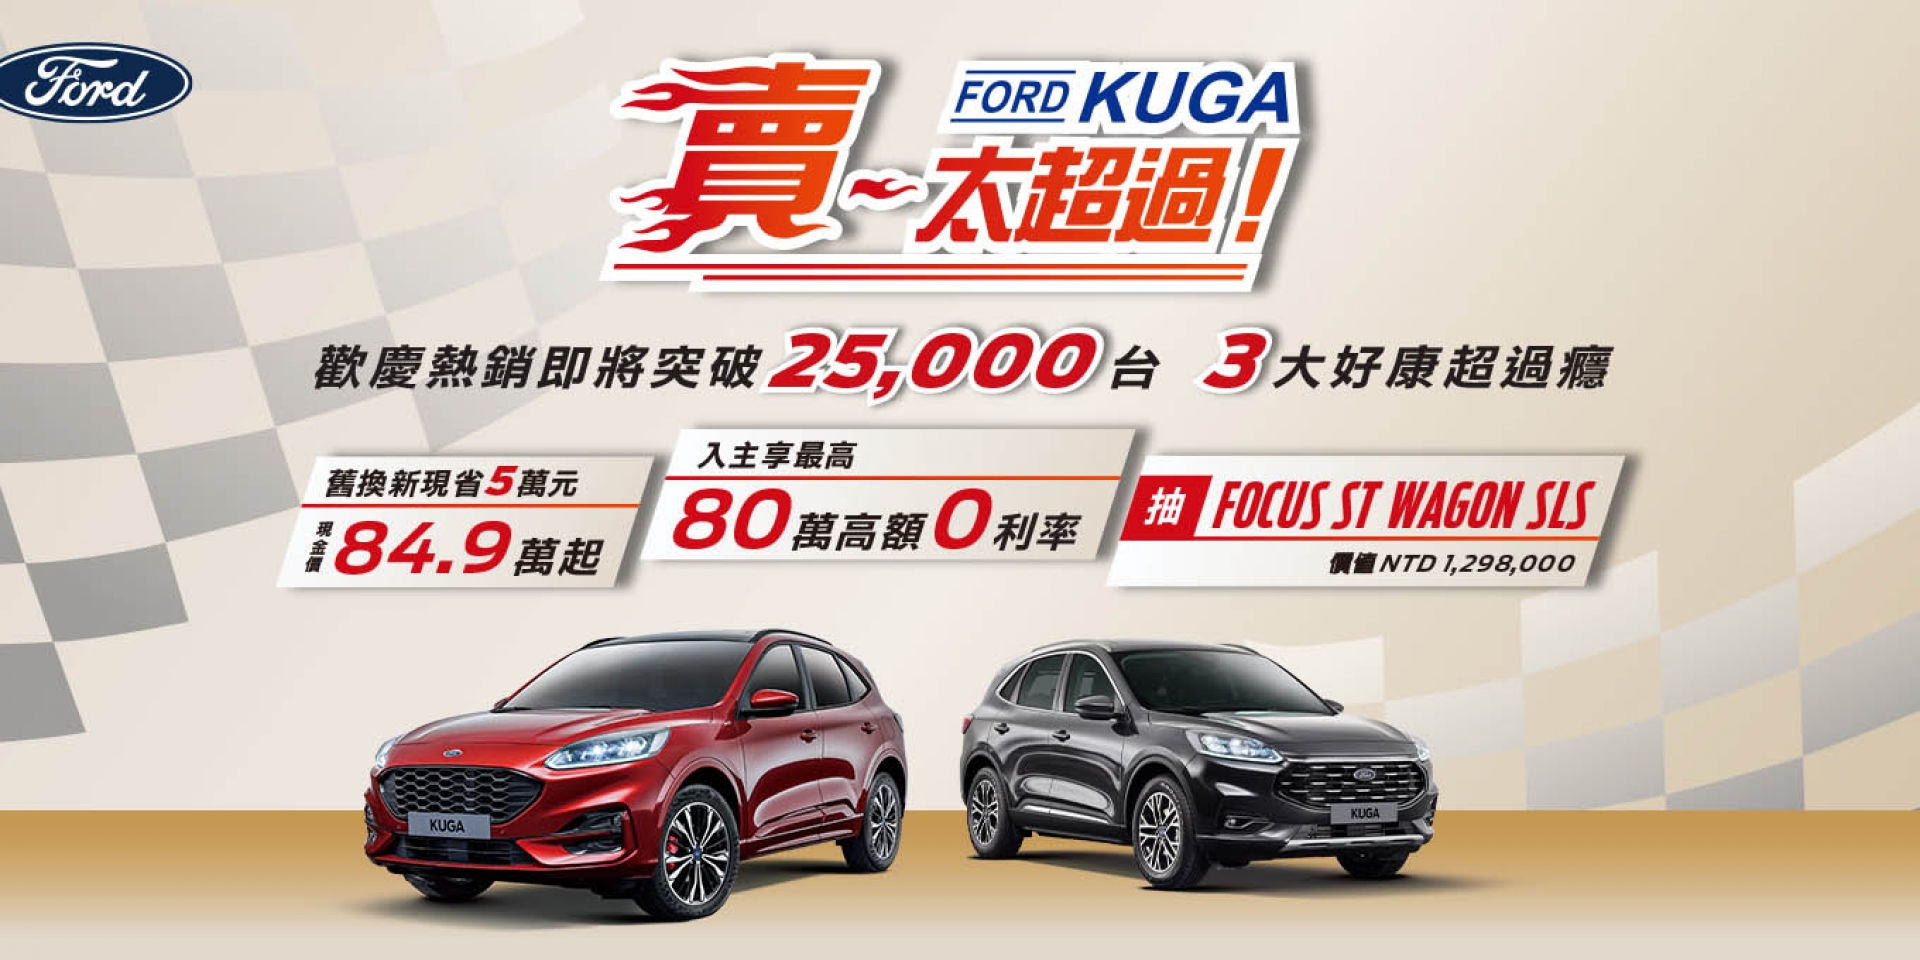 Ford Kuga賣太超過！舊換新現金價84.9萬起 Focus入主享五年延長保固 Ford全車系買再抽Focus ST Wagon SLS Edition